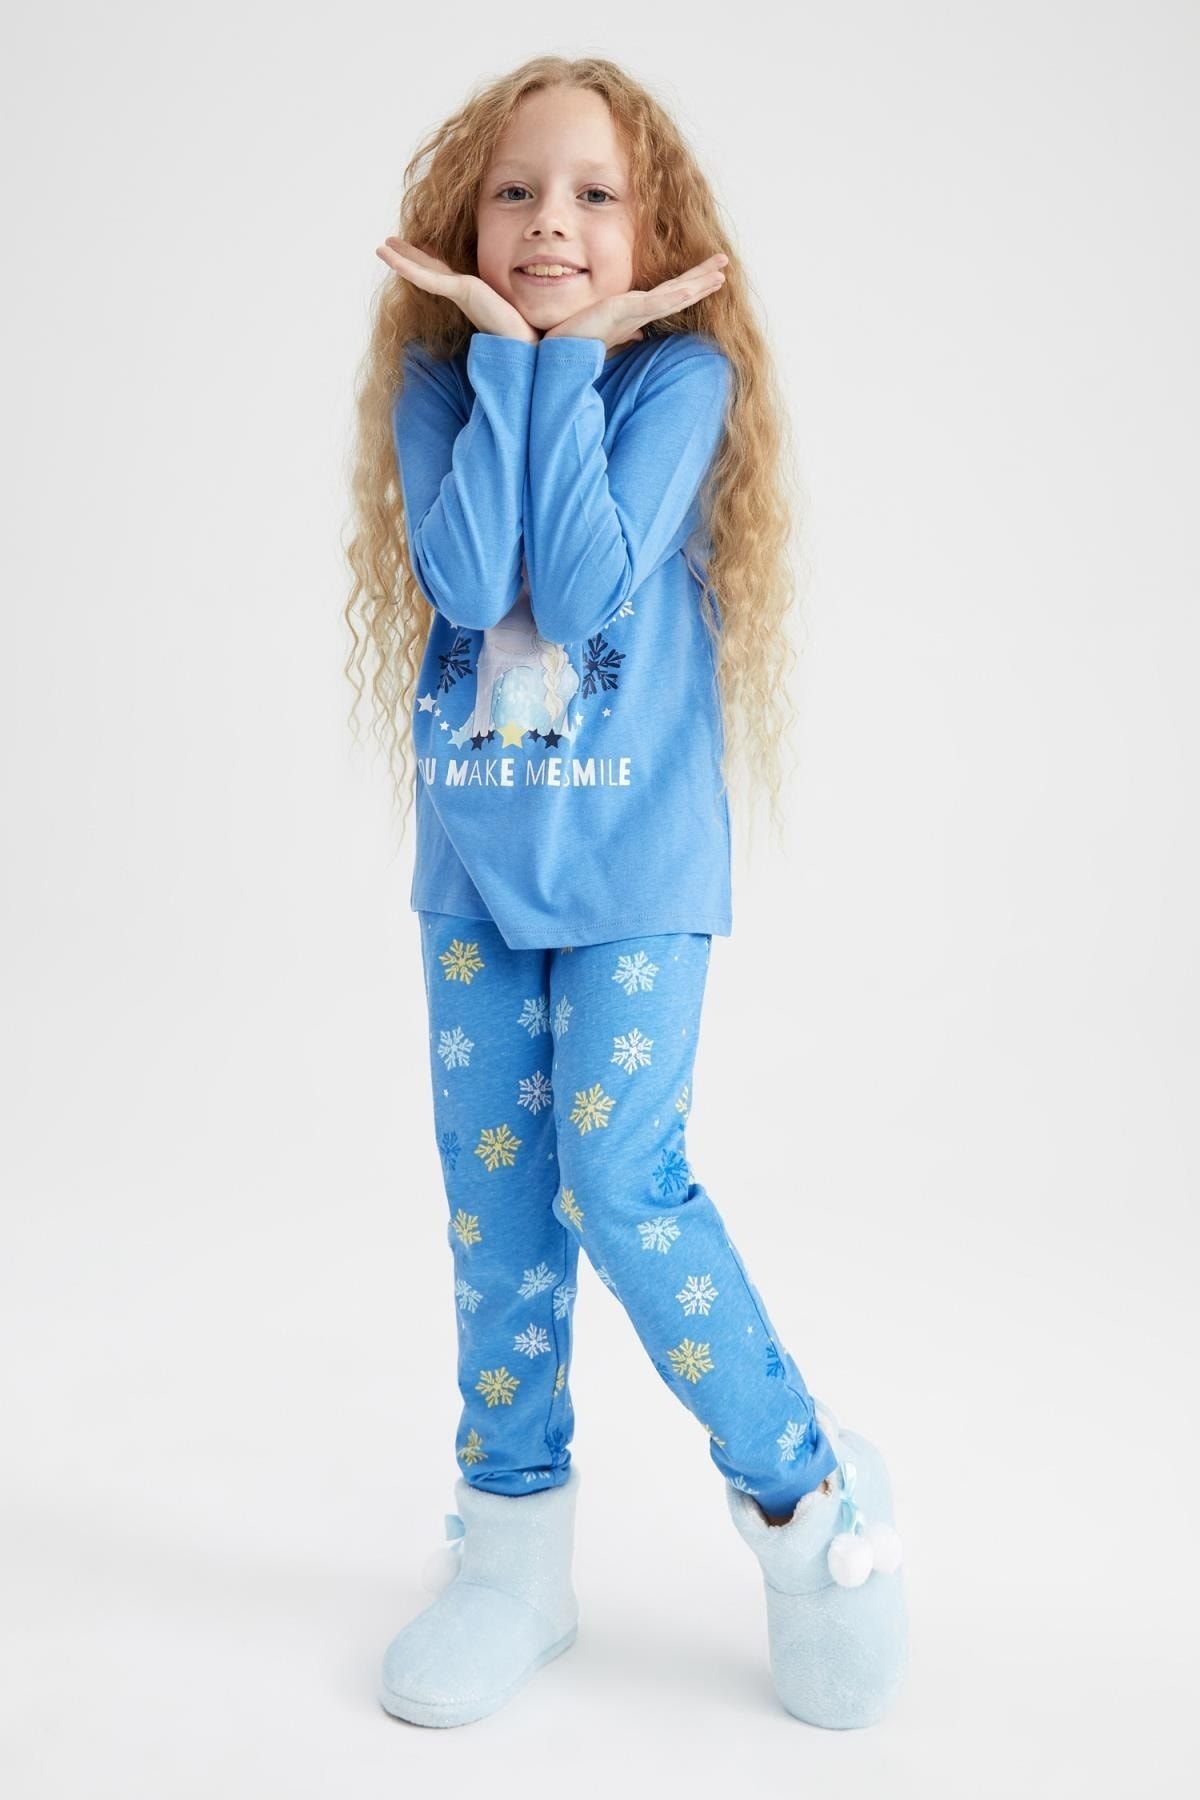 Frozen 2 two piece pajama set for girls 